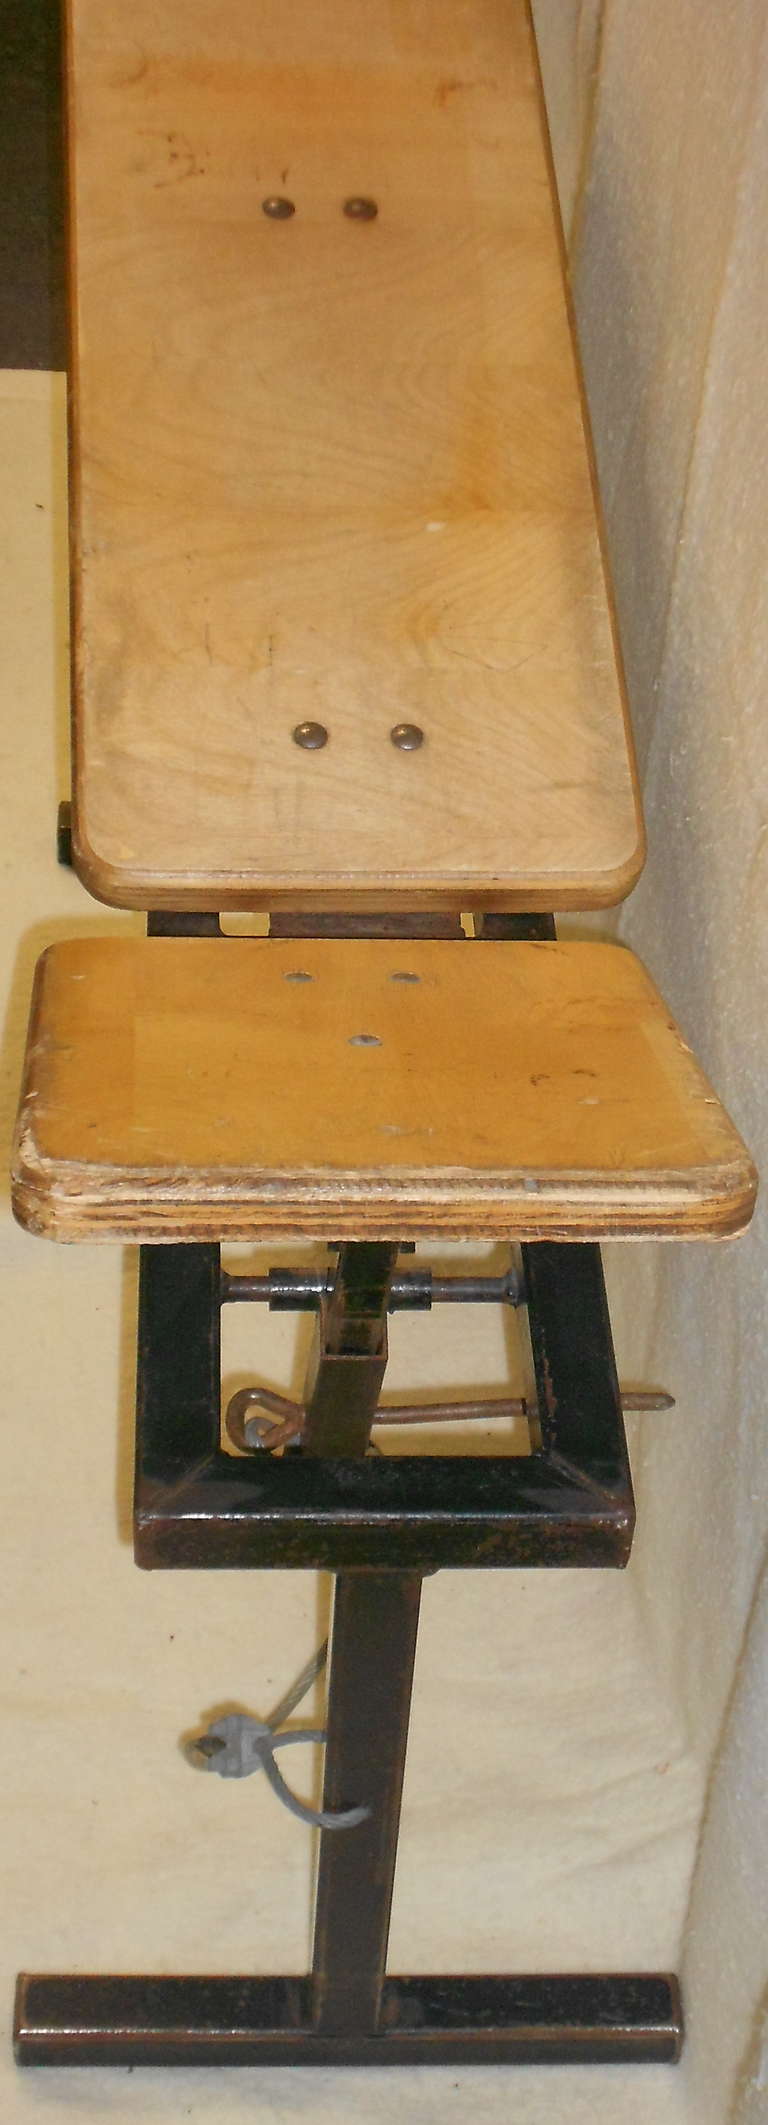 Plywood Mid-century adjustable weight bench